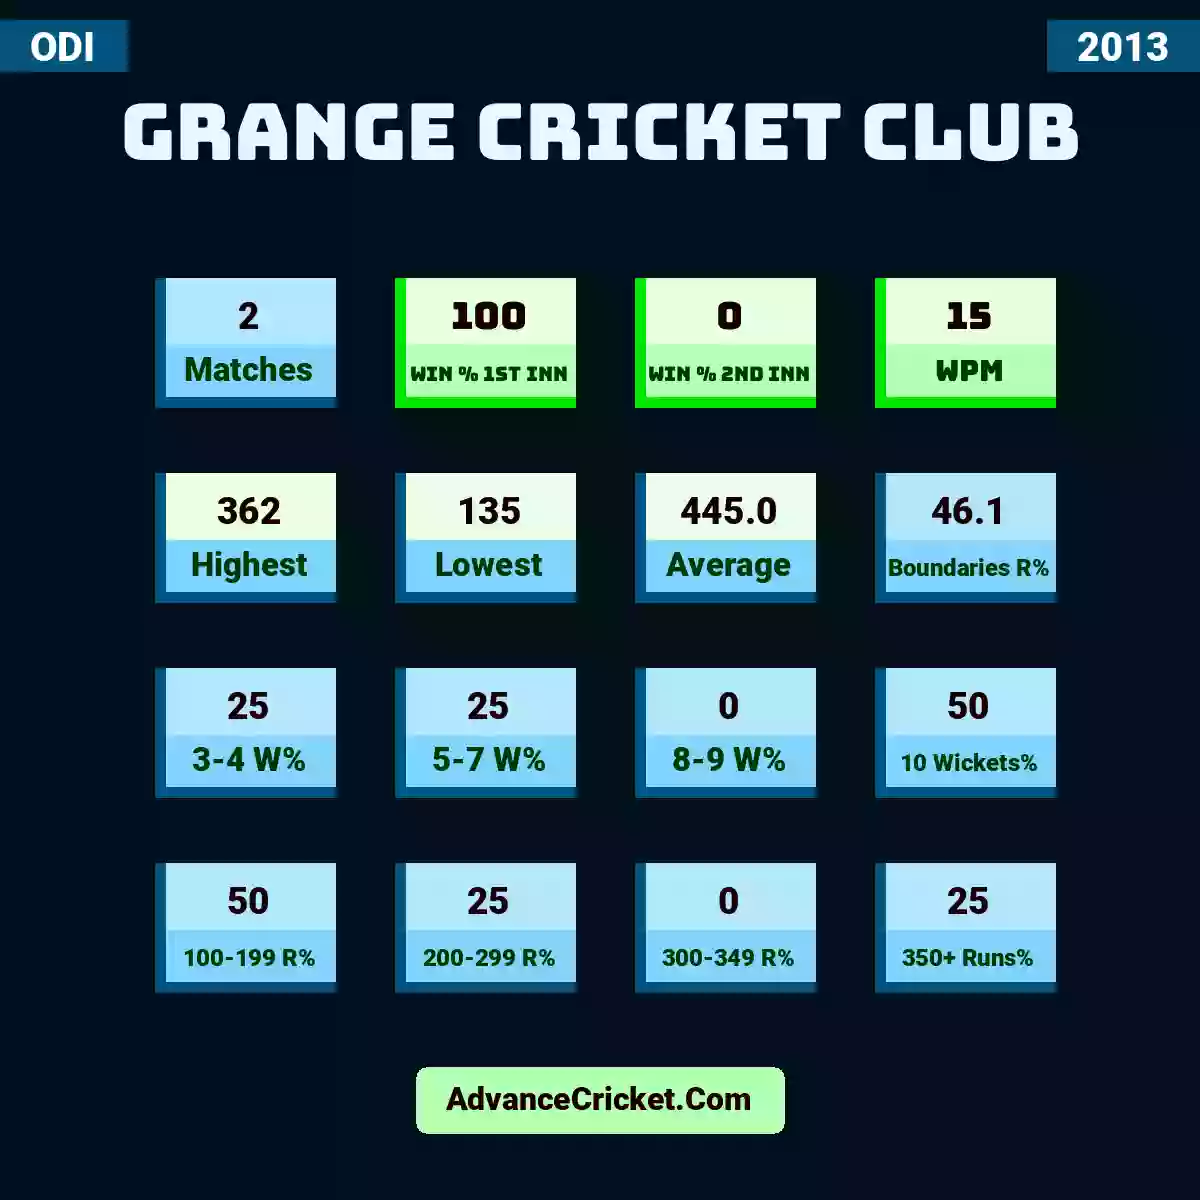 Image showing Grange Cricket Club with Matches: 2, Win % 1st Inn: 100, Win % 2nd Inn: 0, WPM: 15, Highest: 362, Lowest: 135, Average: 445.0, Boundaries R%: 46.1, 3-4 W%: 25, 5-7 W%: 25, 8-9 W%: 0, 10 Wickets%: 50, 100-199 R%: 50, 200-299 R%: 25, 300-349 R%: 0, 350+ Runs%: 25.